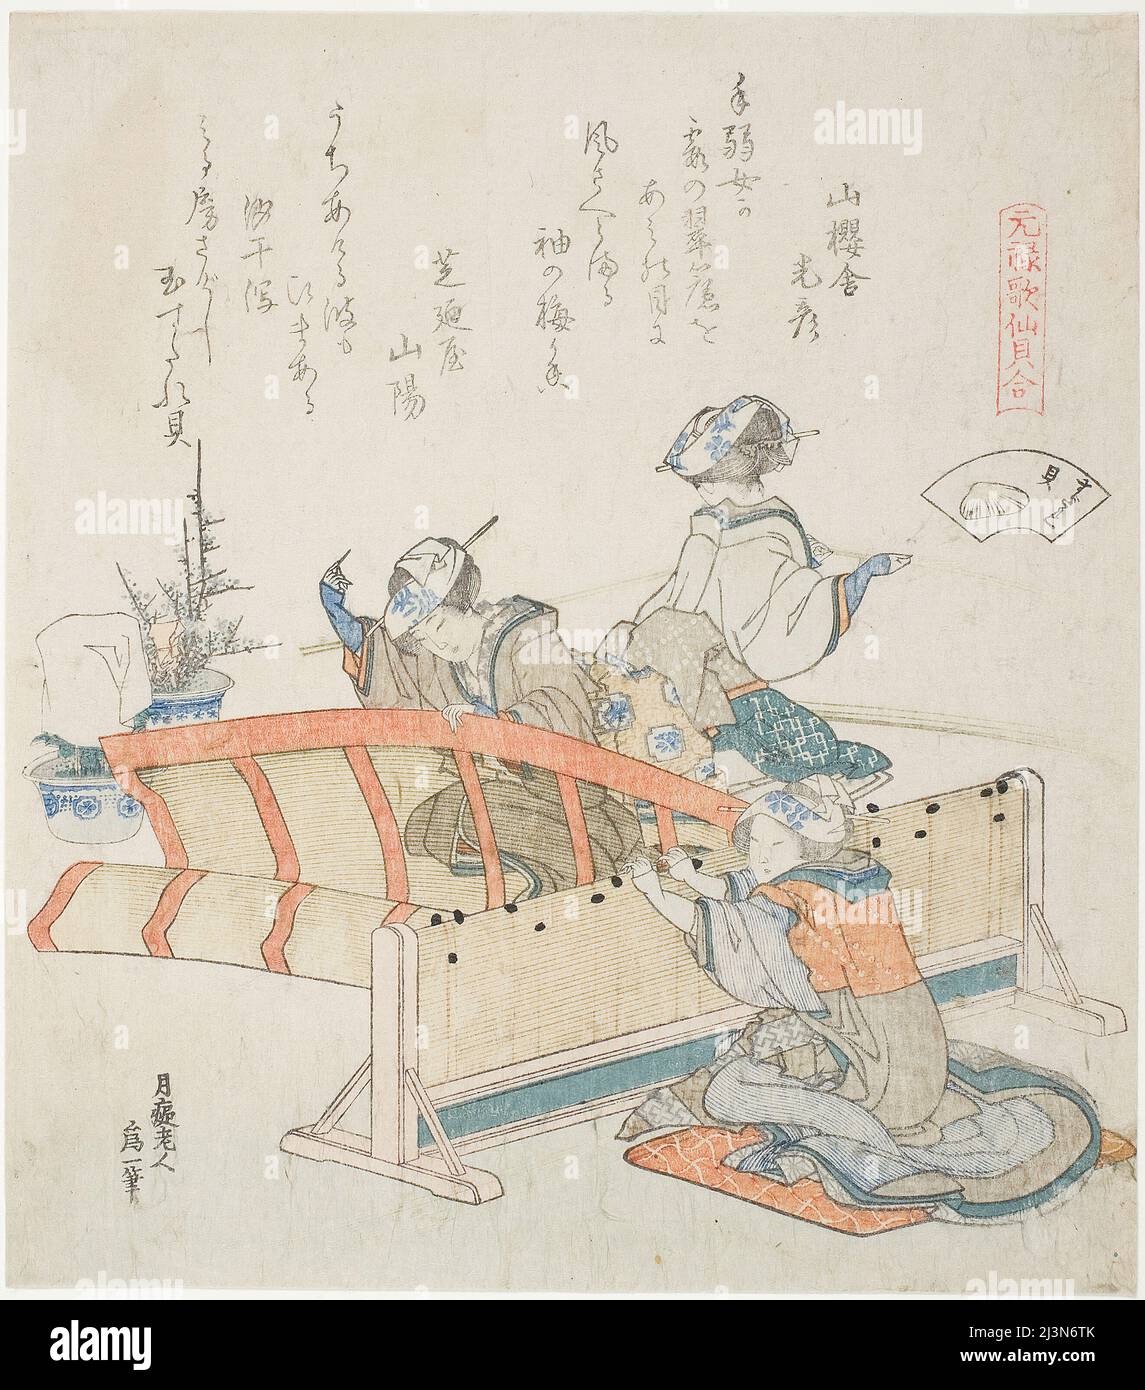 Bamboo Jalousien machen, Illustration für die Bambusblondshülle (Sudare-gai), aus der Serie "A Matching Game with Genroku-Period Poem Shells (Genroku kasen kai awase)", Japan, 1821. Stockfoto